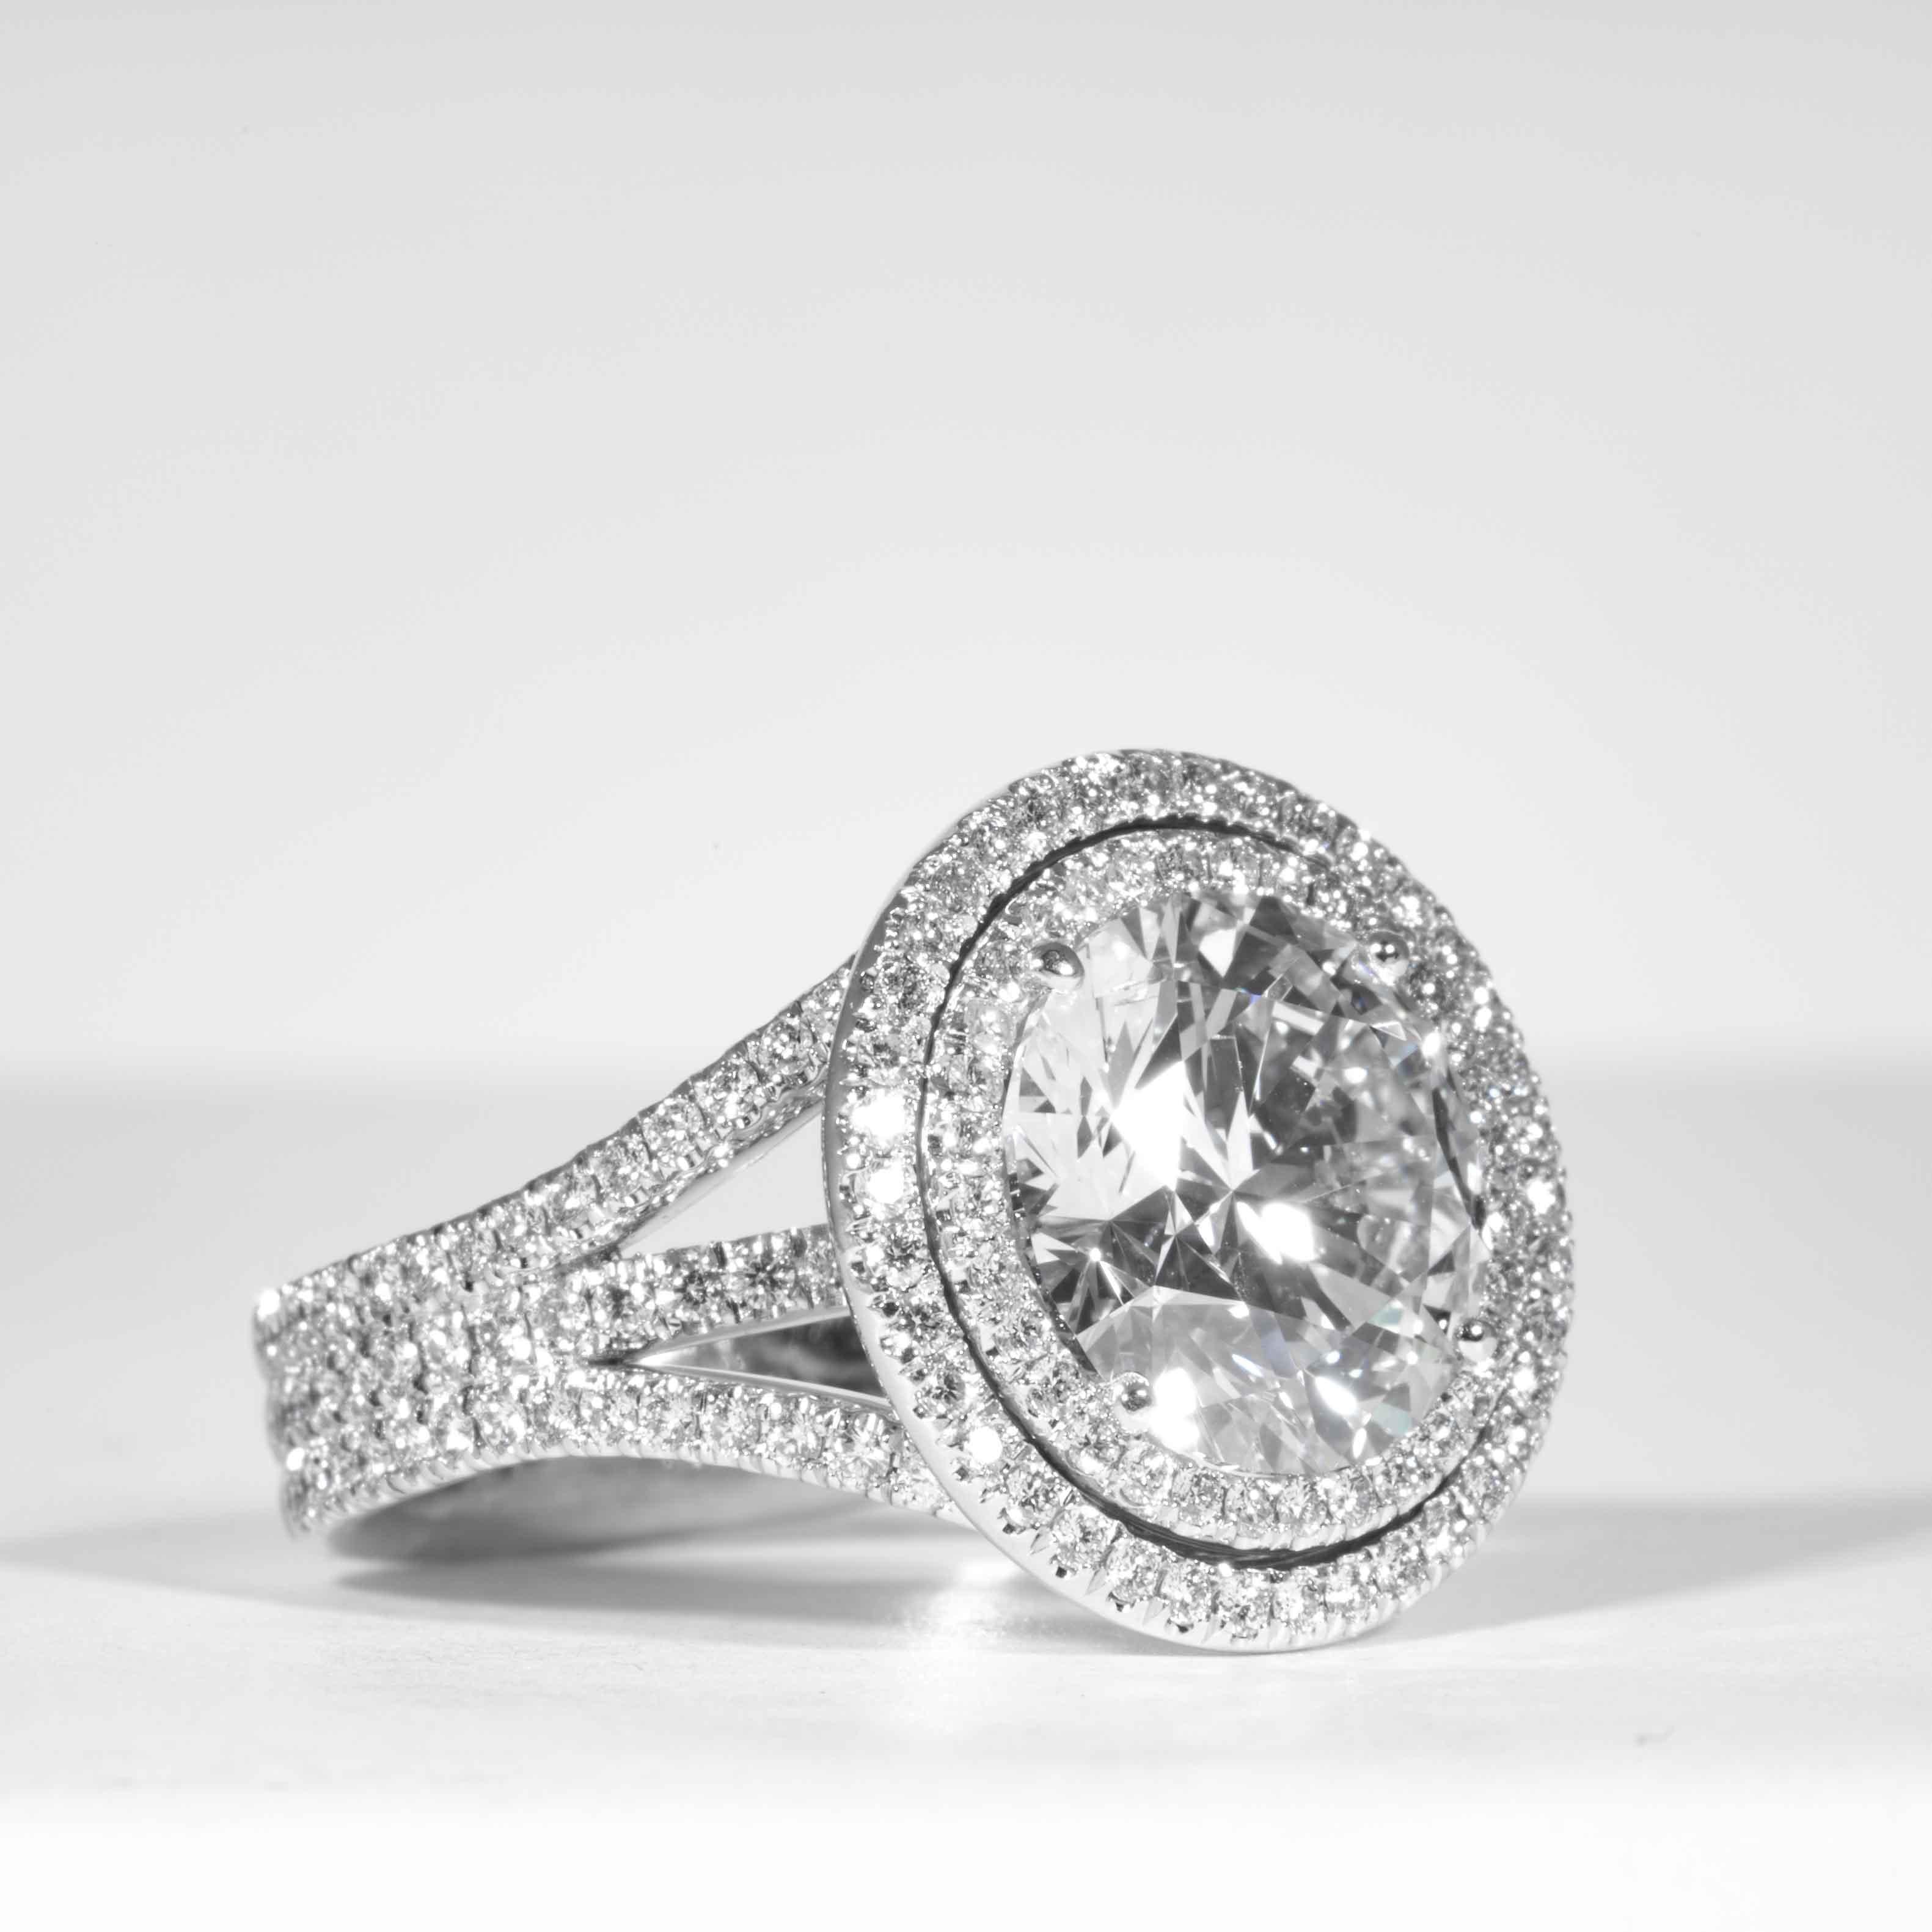 5.01 carat diamond ring